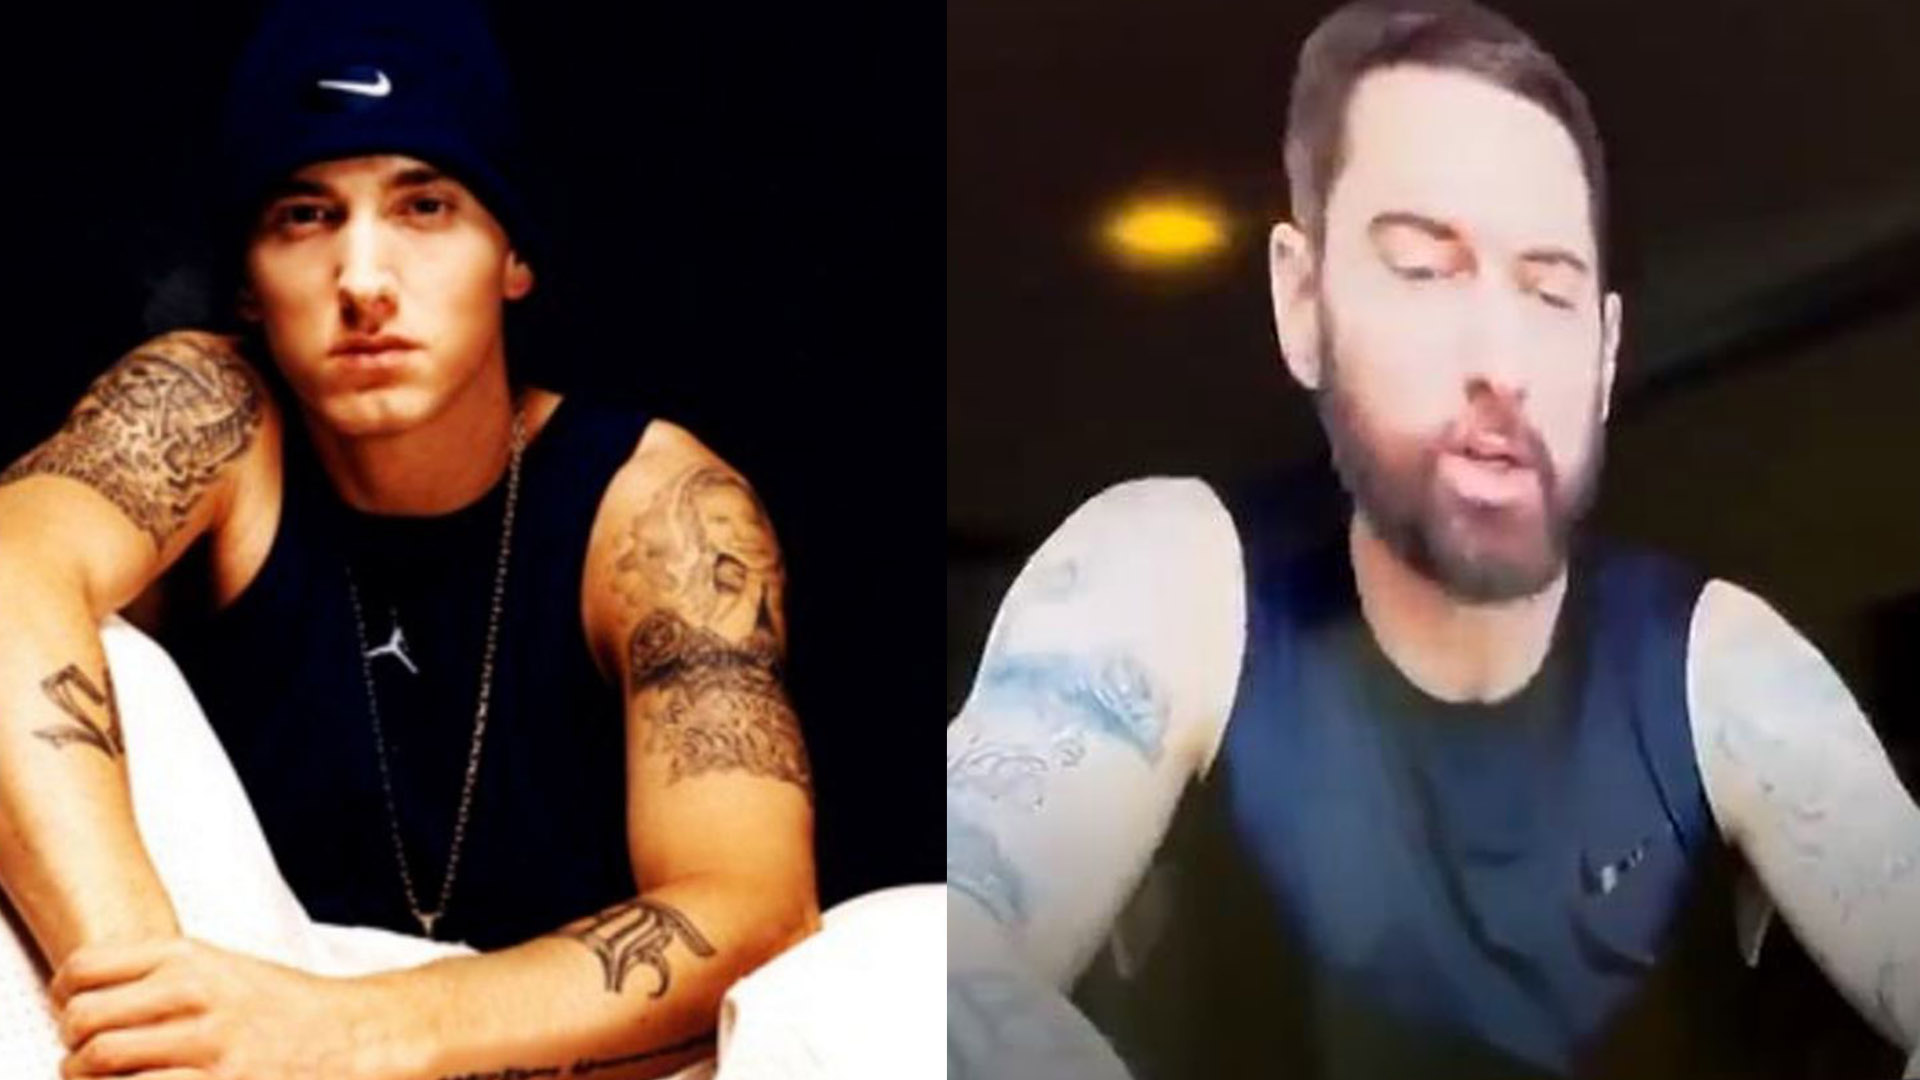 Eminem to release new album in 2013